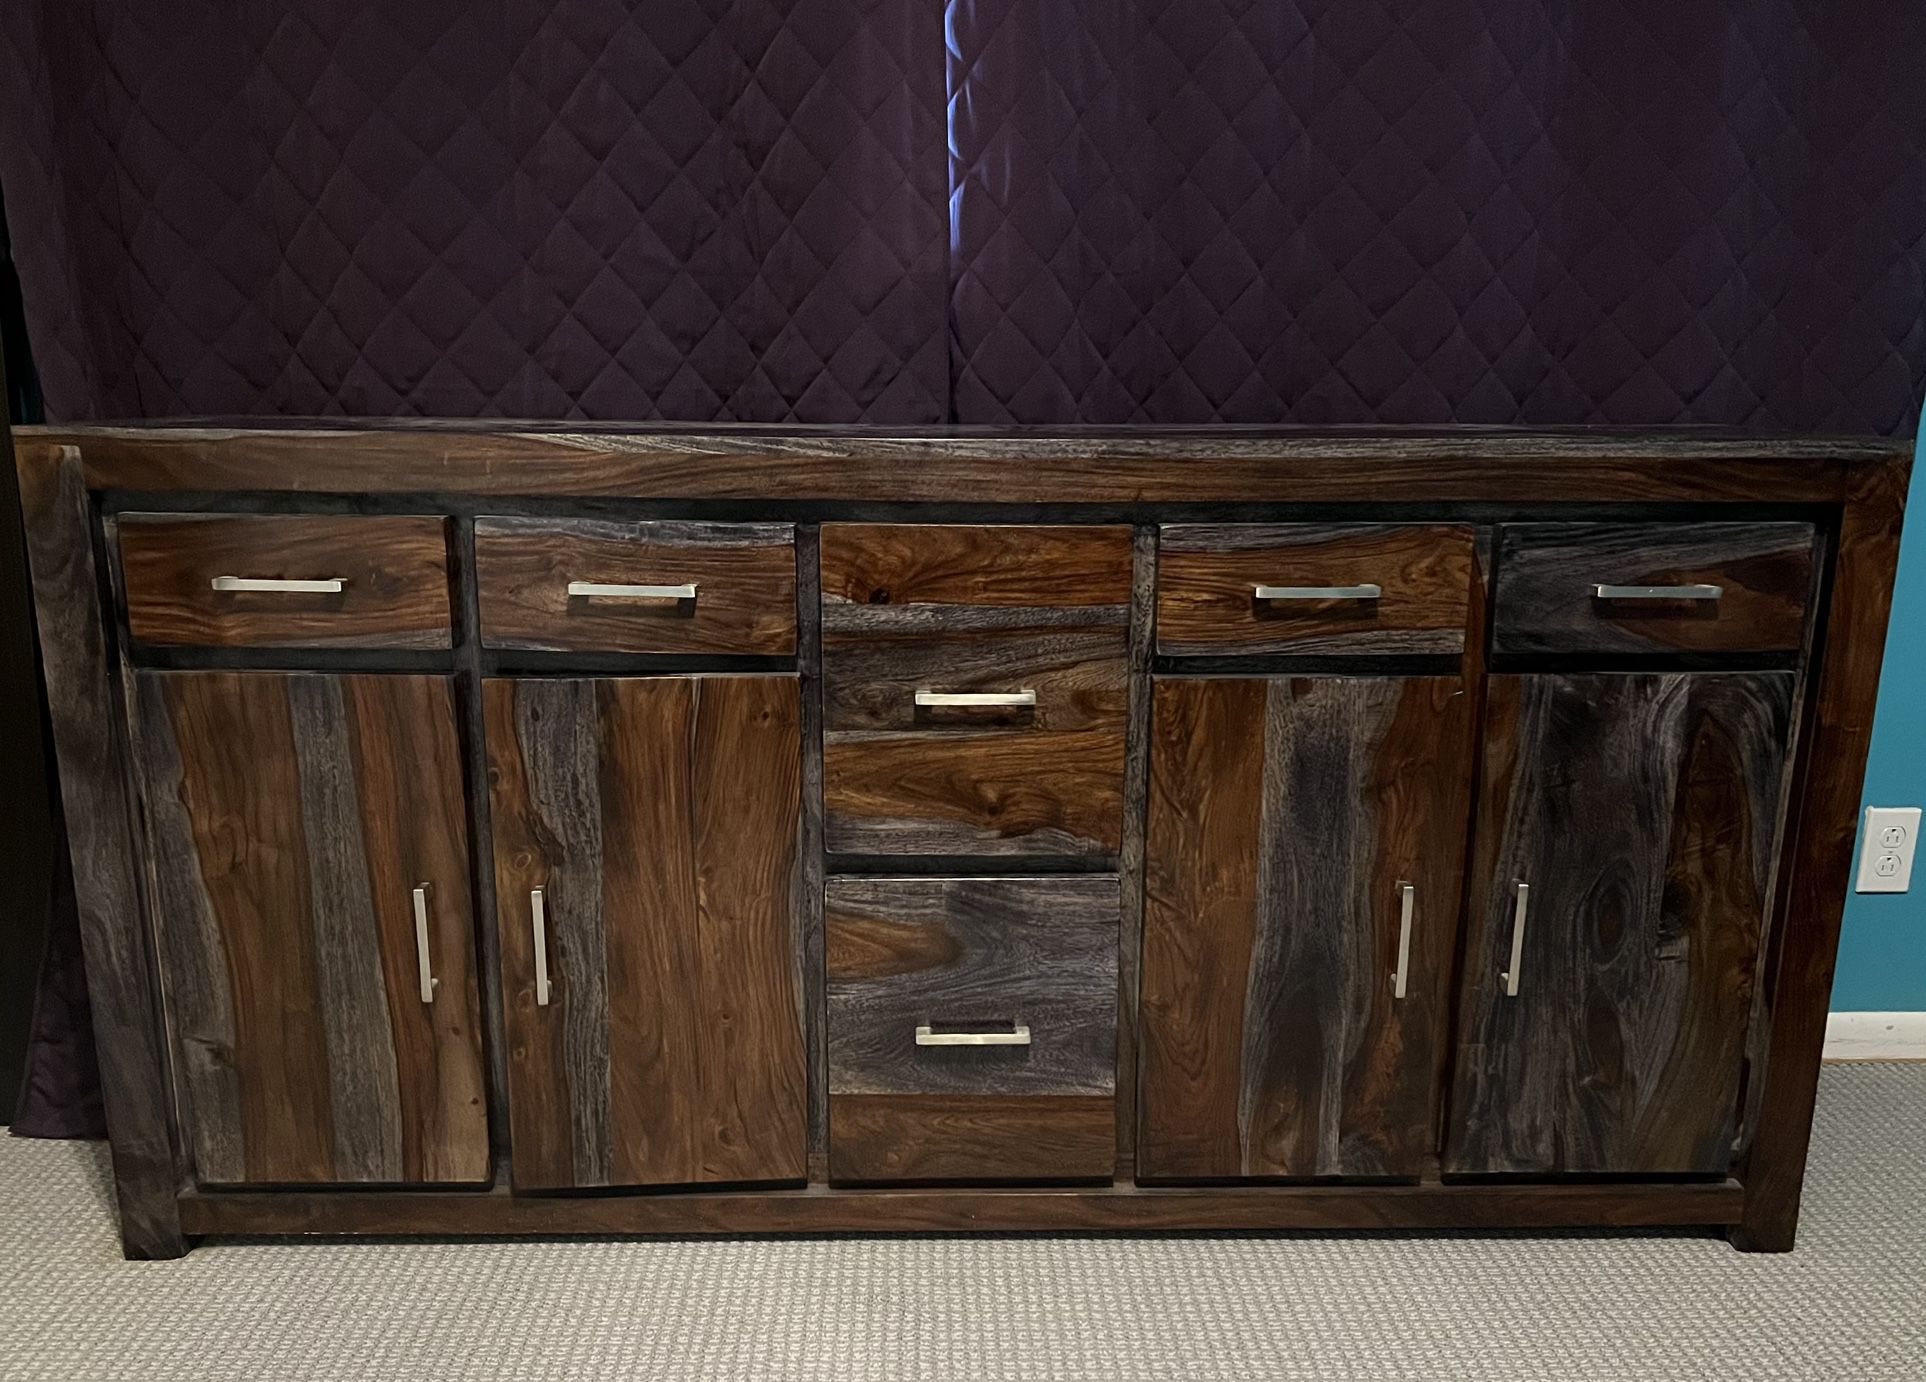 Beautiful Solid Wood Dresser